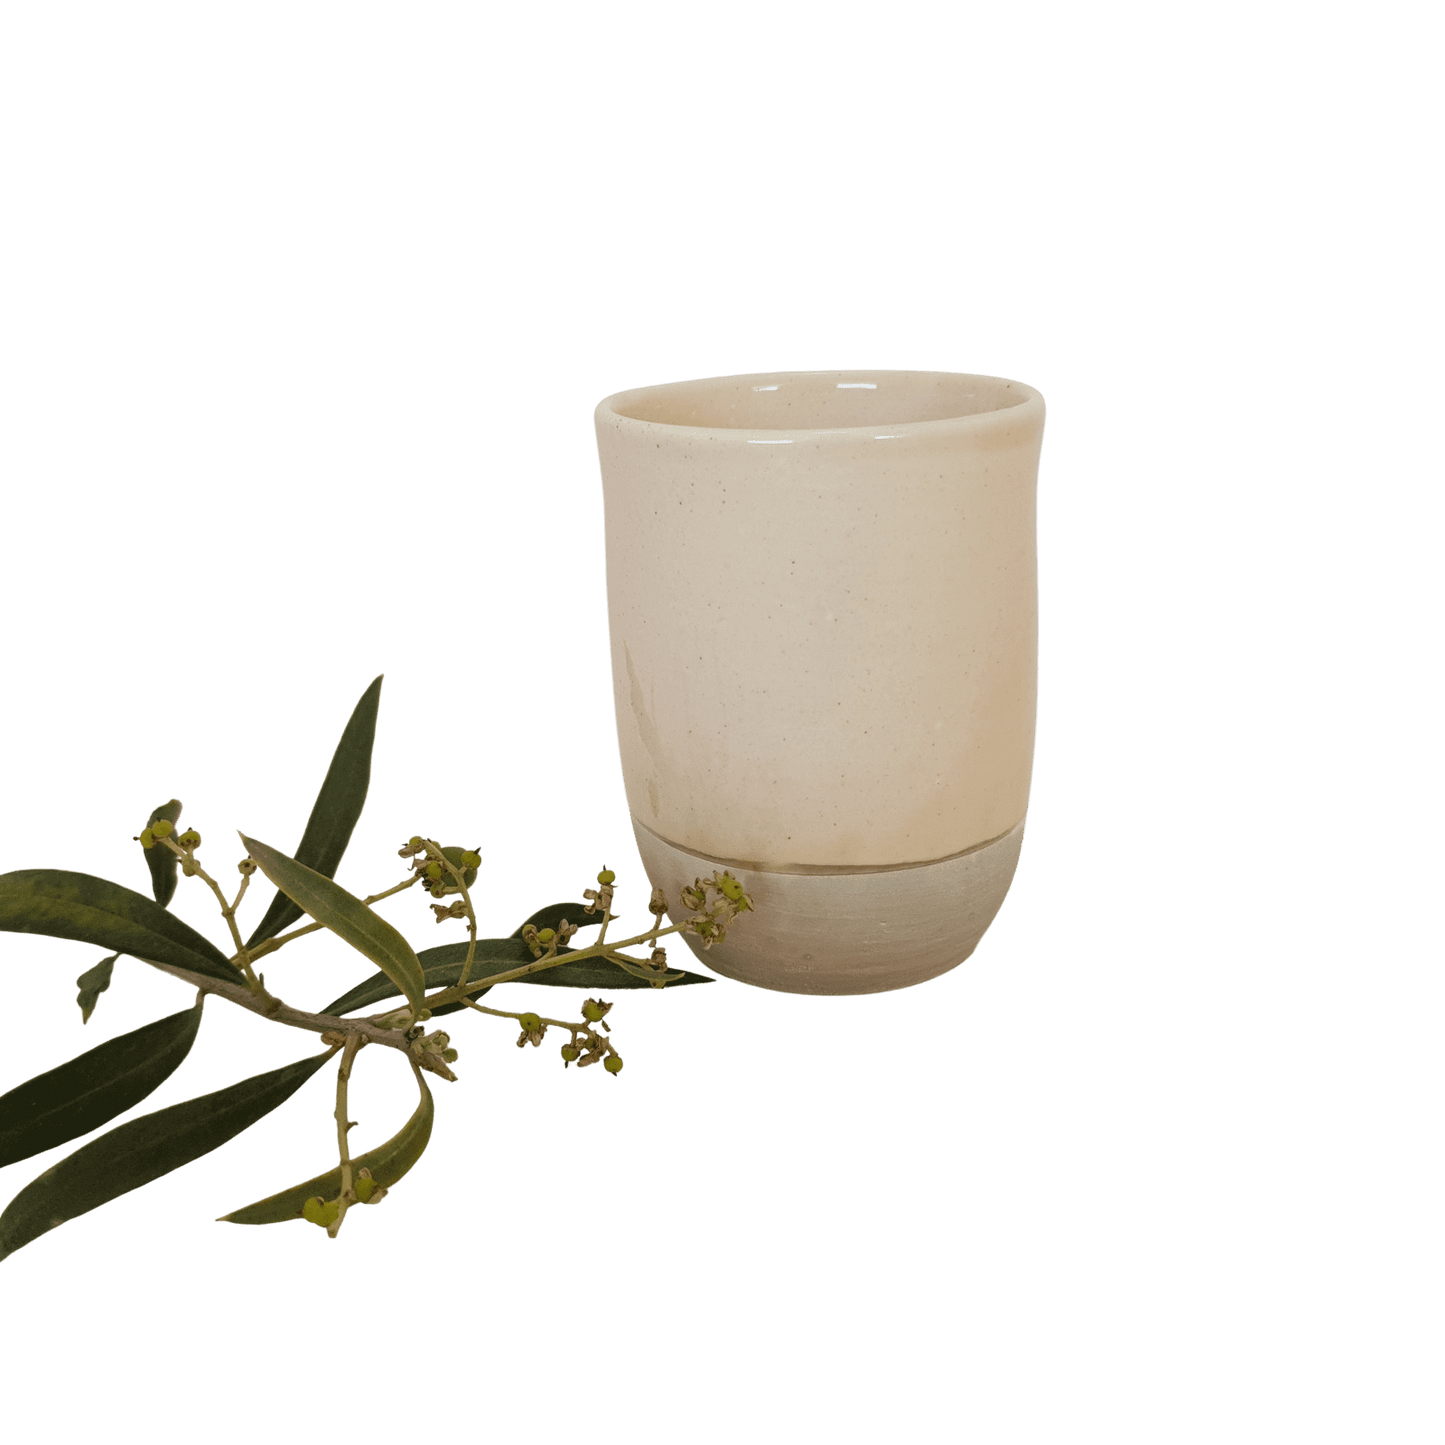 MIXED mug in ceramic - 10 cm high (2nd assortment)